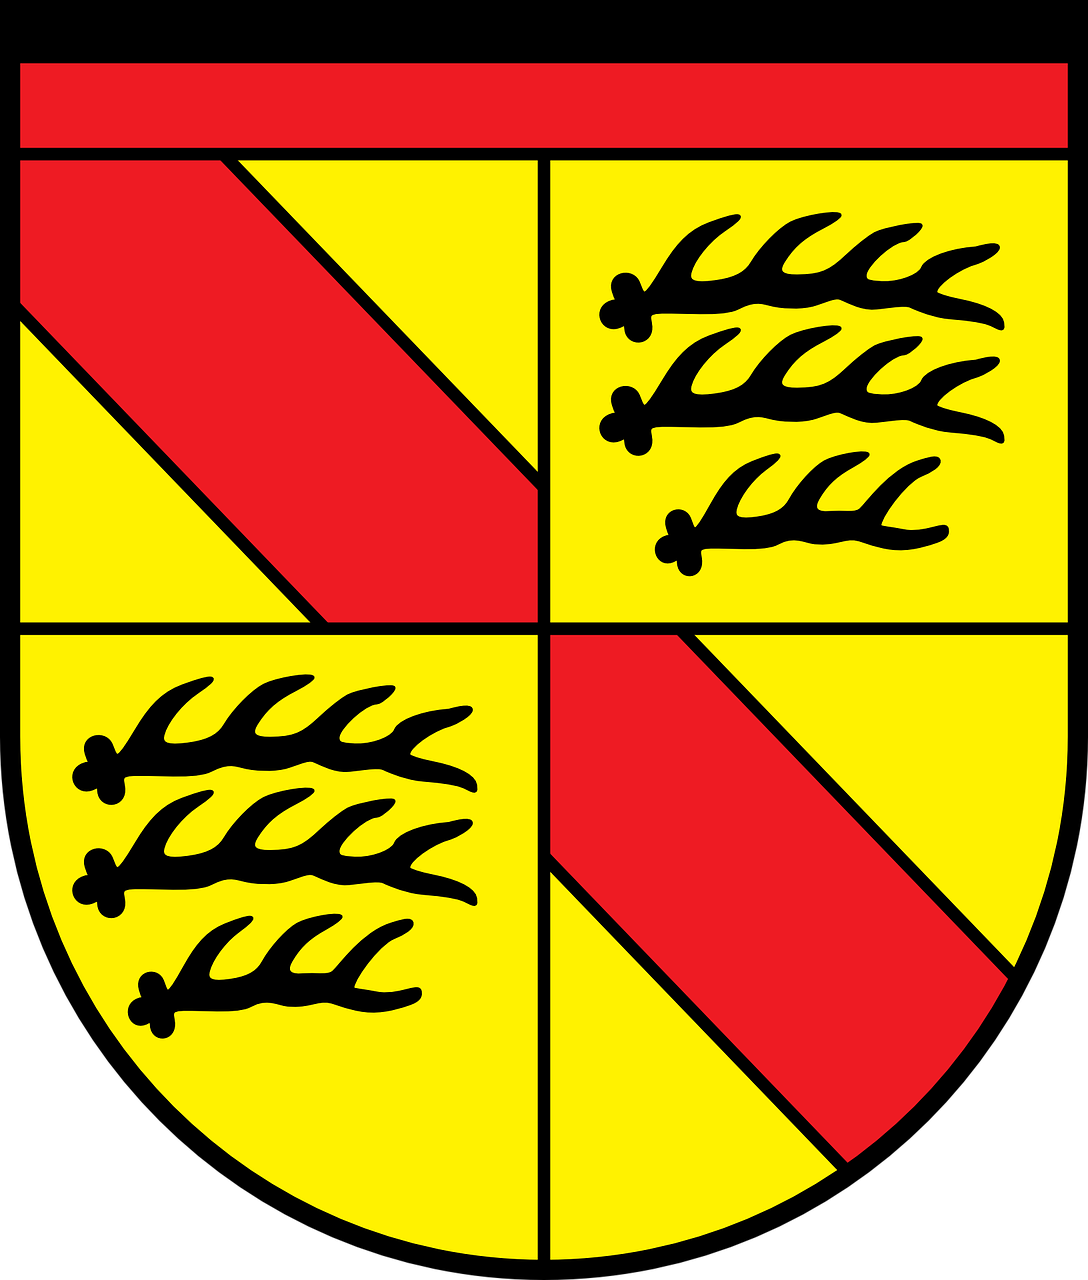 baden-baden coat of arms emblem free photo